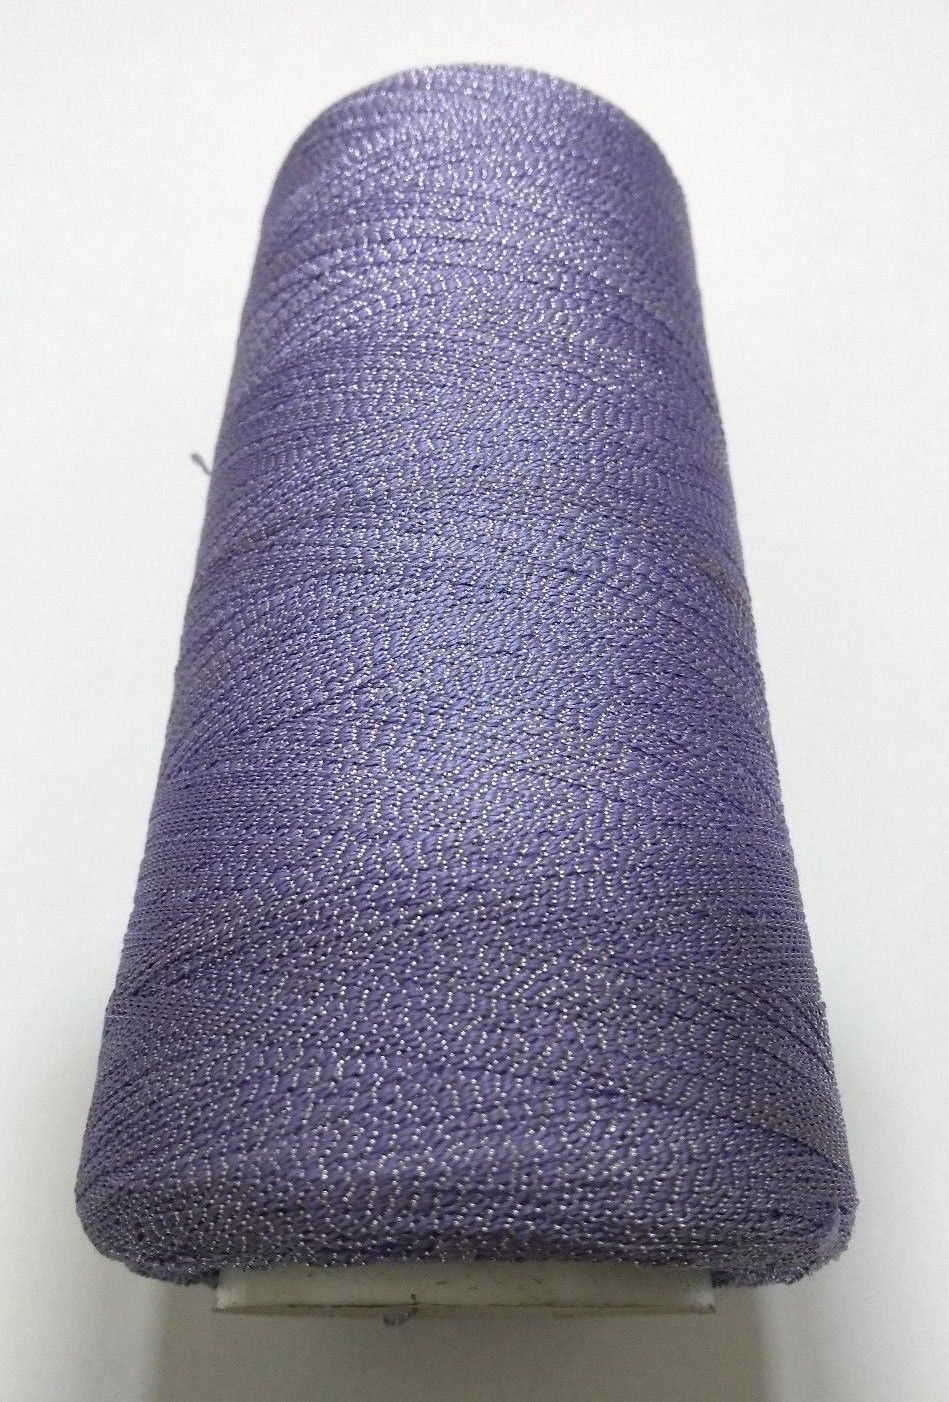 FINE Art Silk Twisted with Lurex NEEM ZARI Thread Yarn Crochet Embroidery Lace